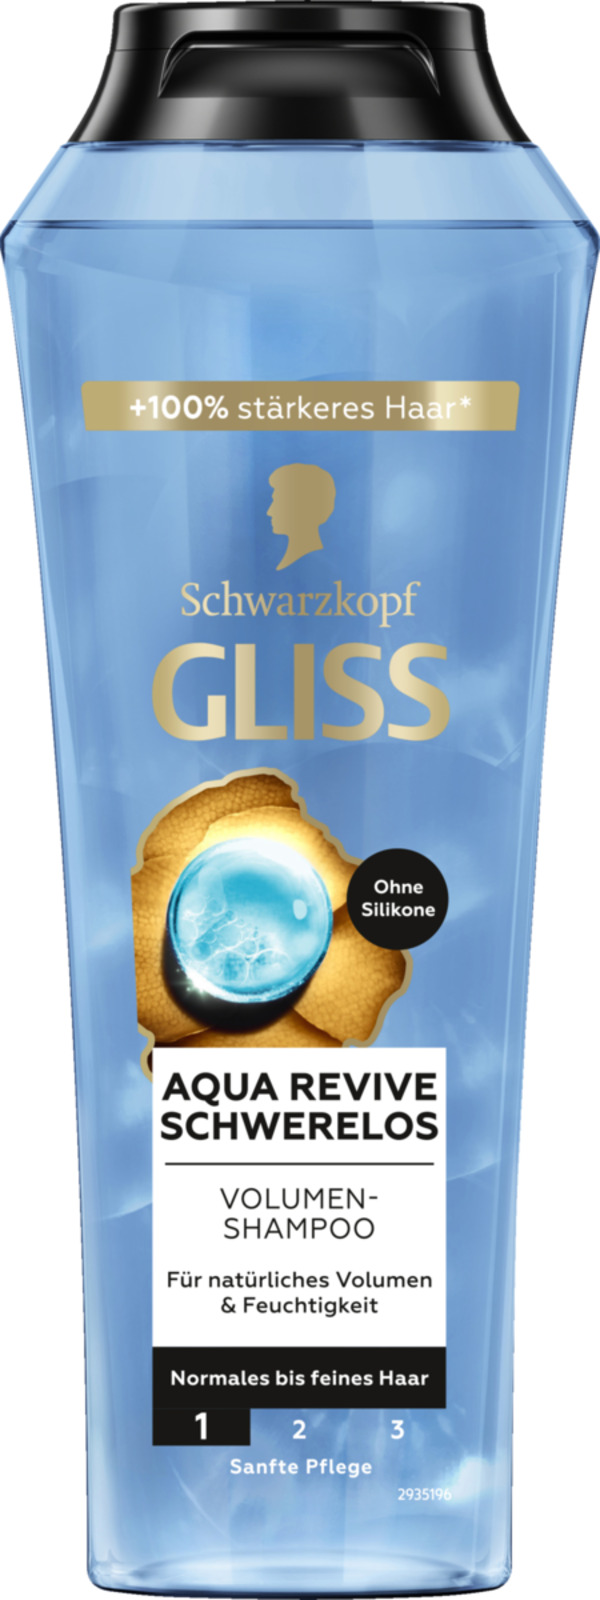 Bild 1 von Gliss Aqua Revive Schwerelos Shampoo